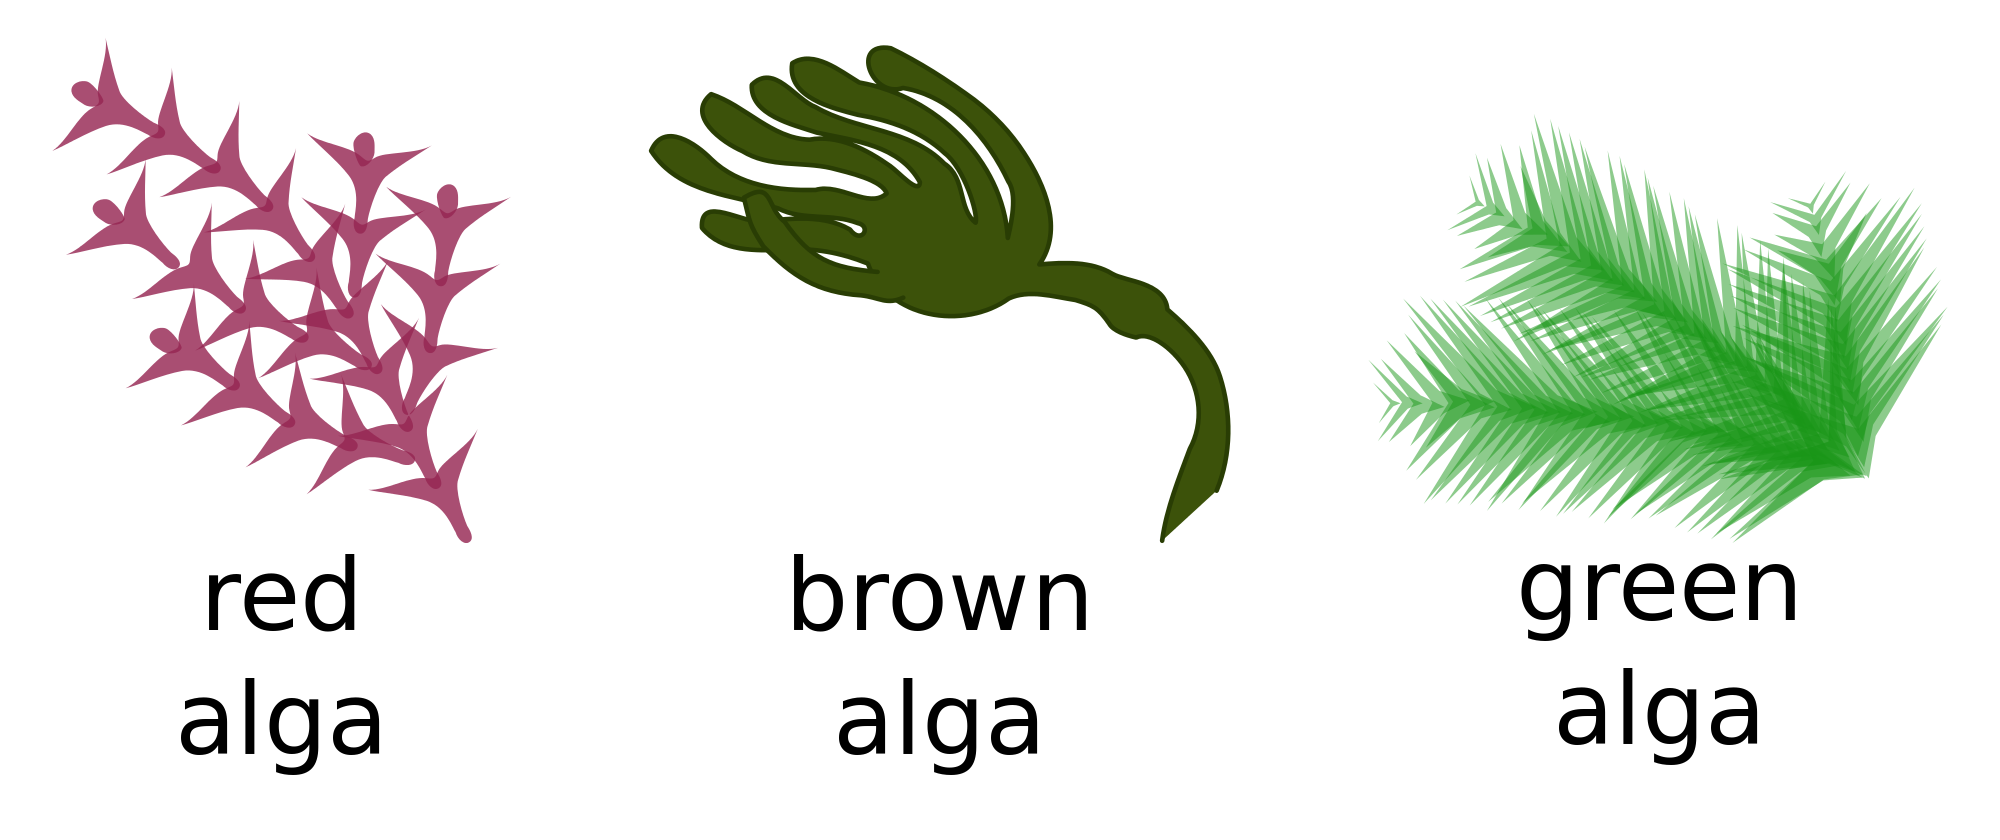 Algae svg #14, Download drawings